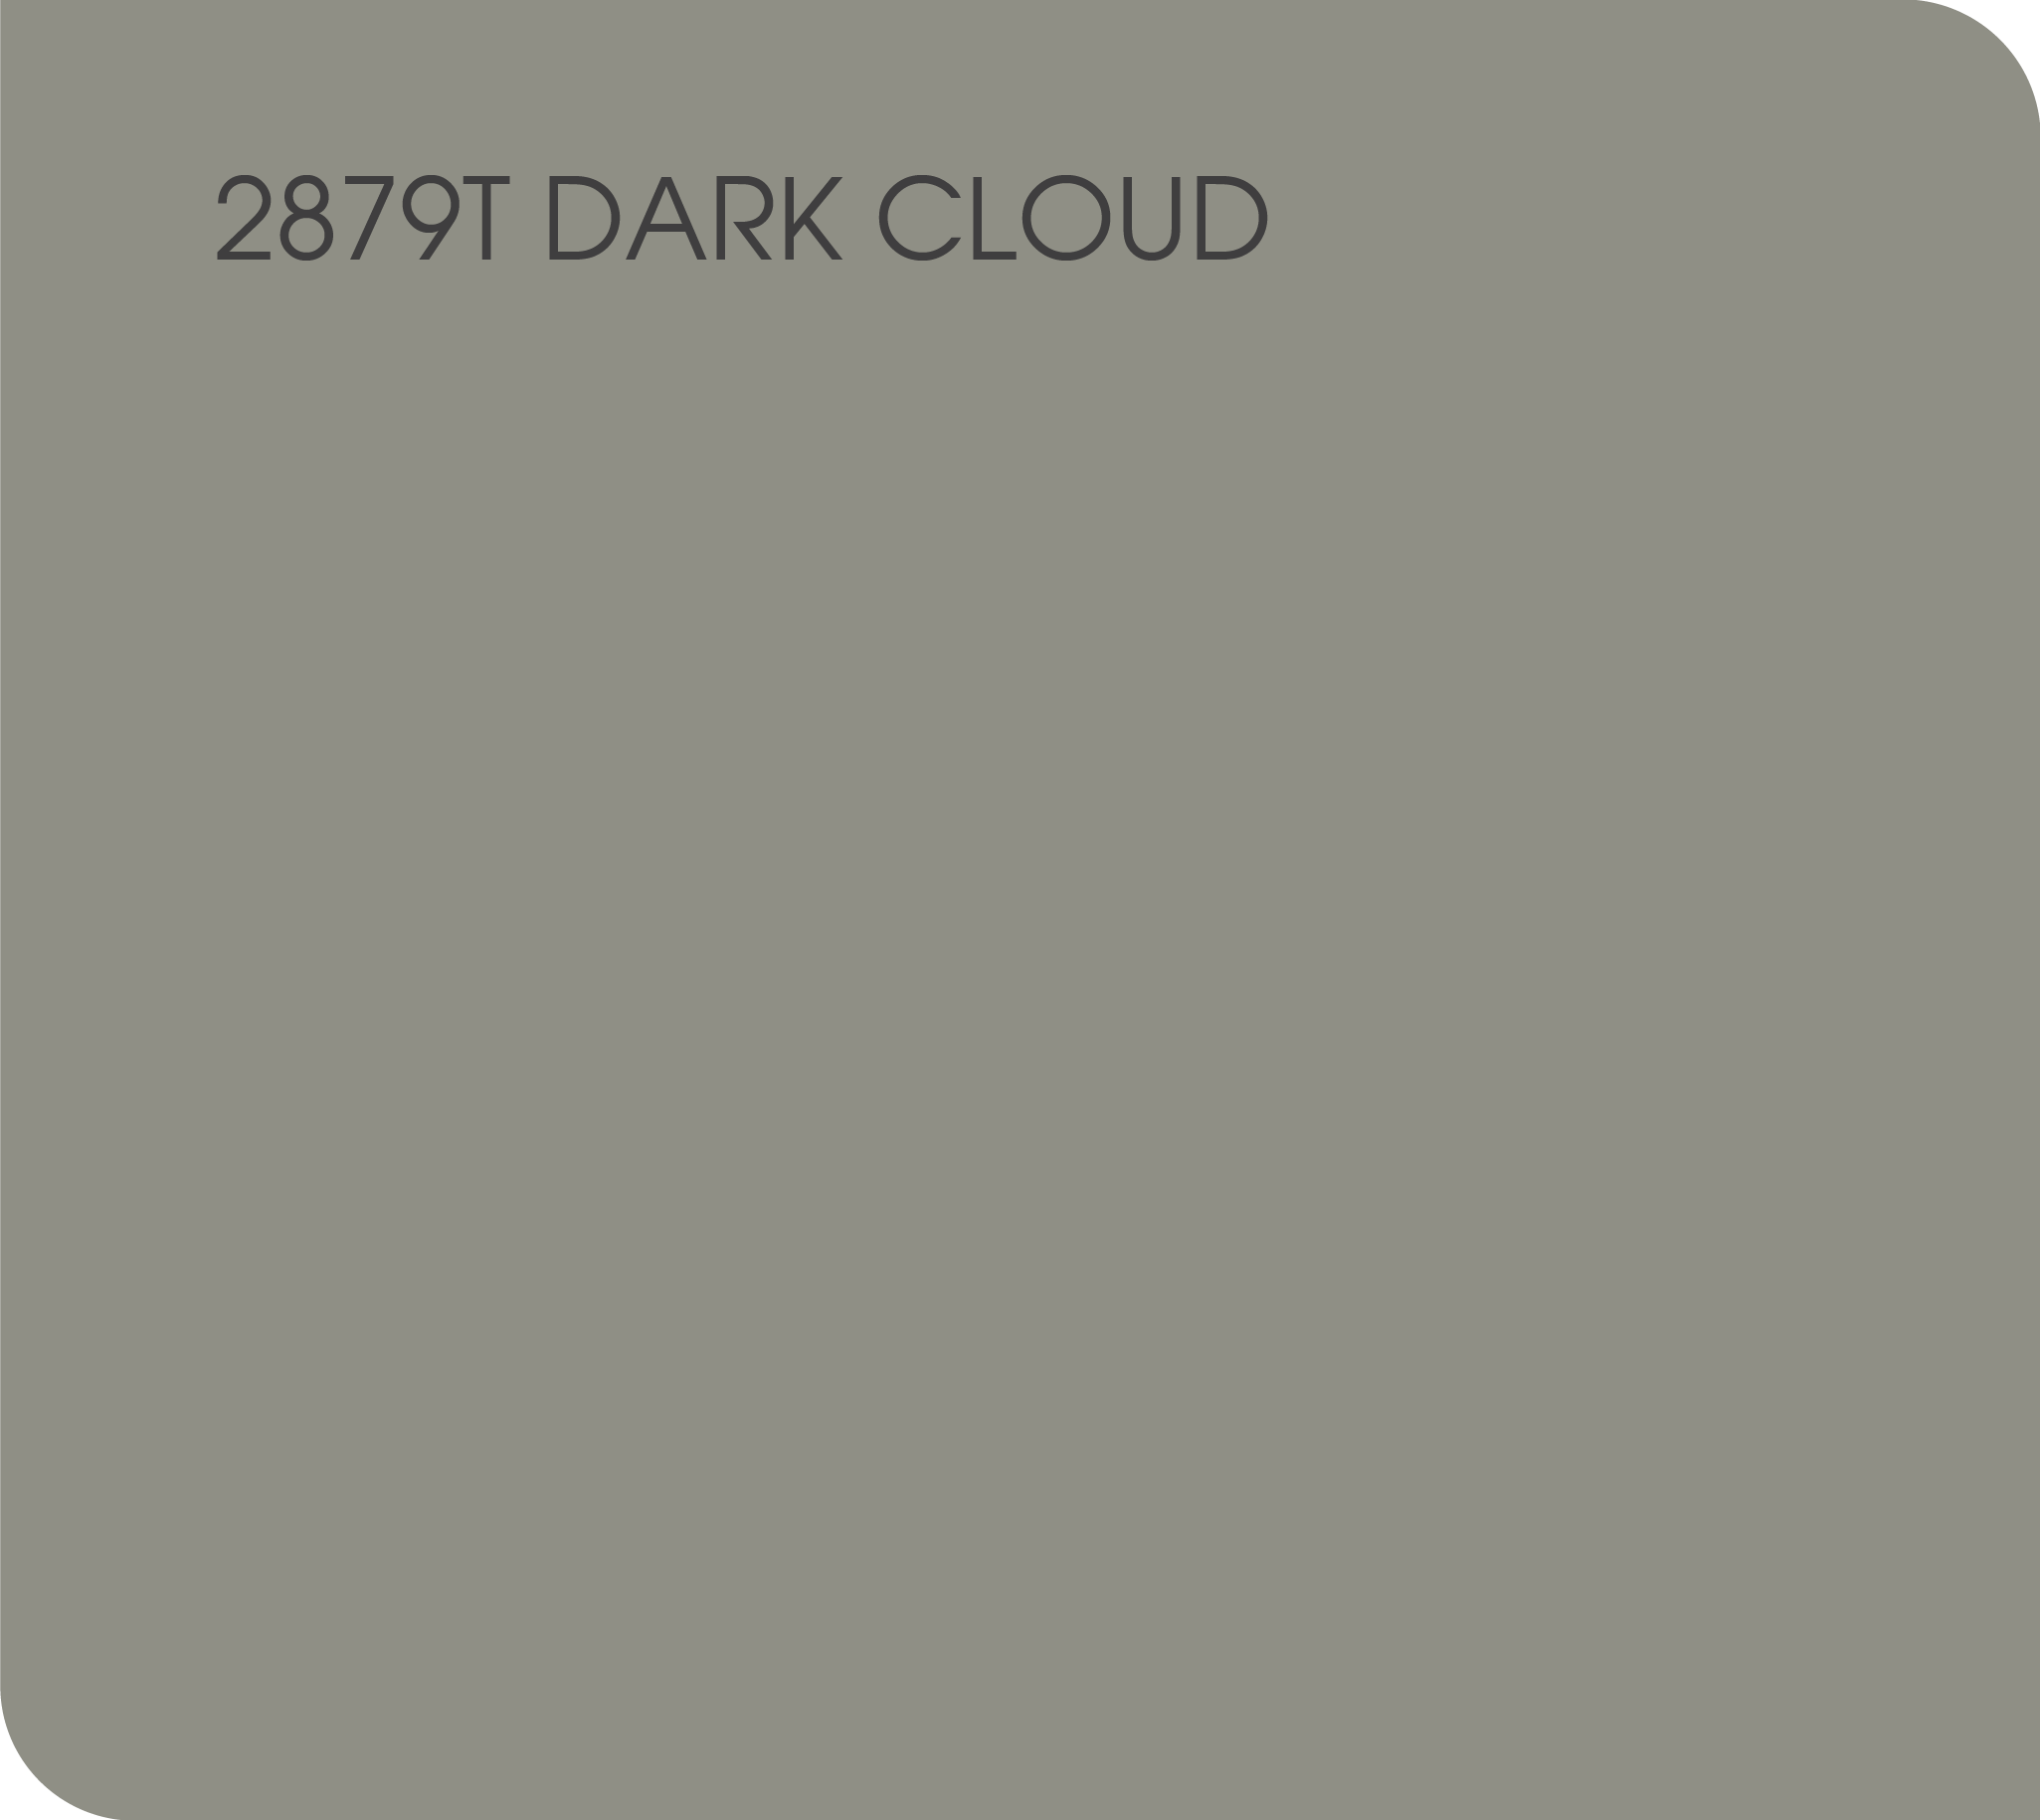 dark cloud 2879T